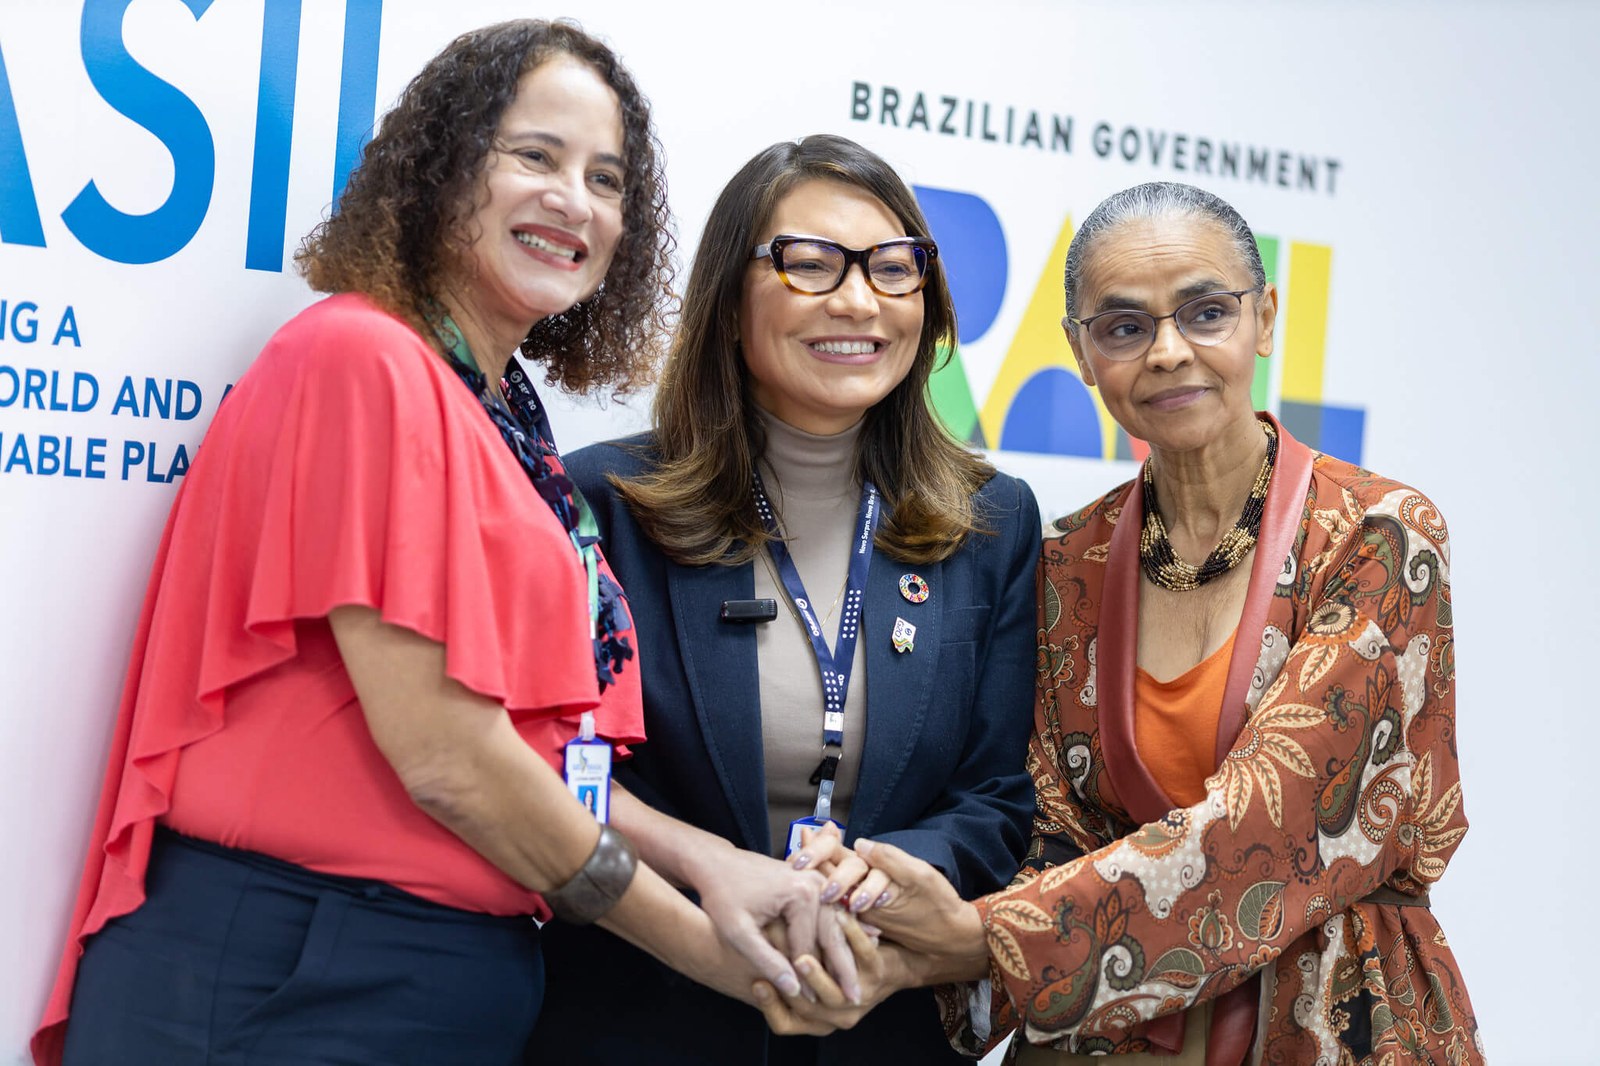 Brazilian ministers Marina Silva and Luciana Santos, and sociologist Janja Lula championed bioeconomy for sustainable and equitable economic growth | Photo: G20 Brasil Audiovisual